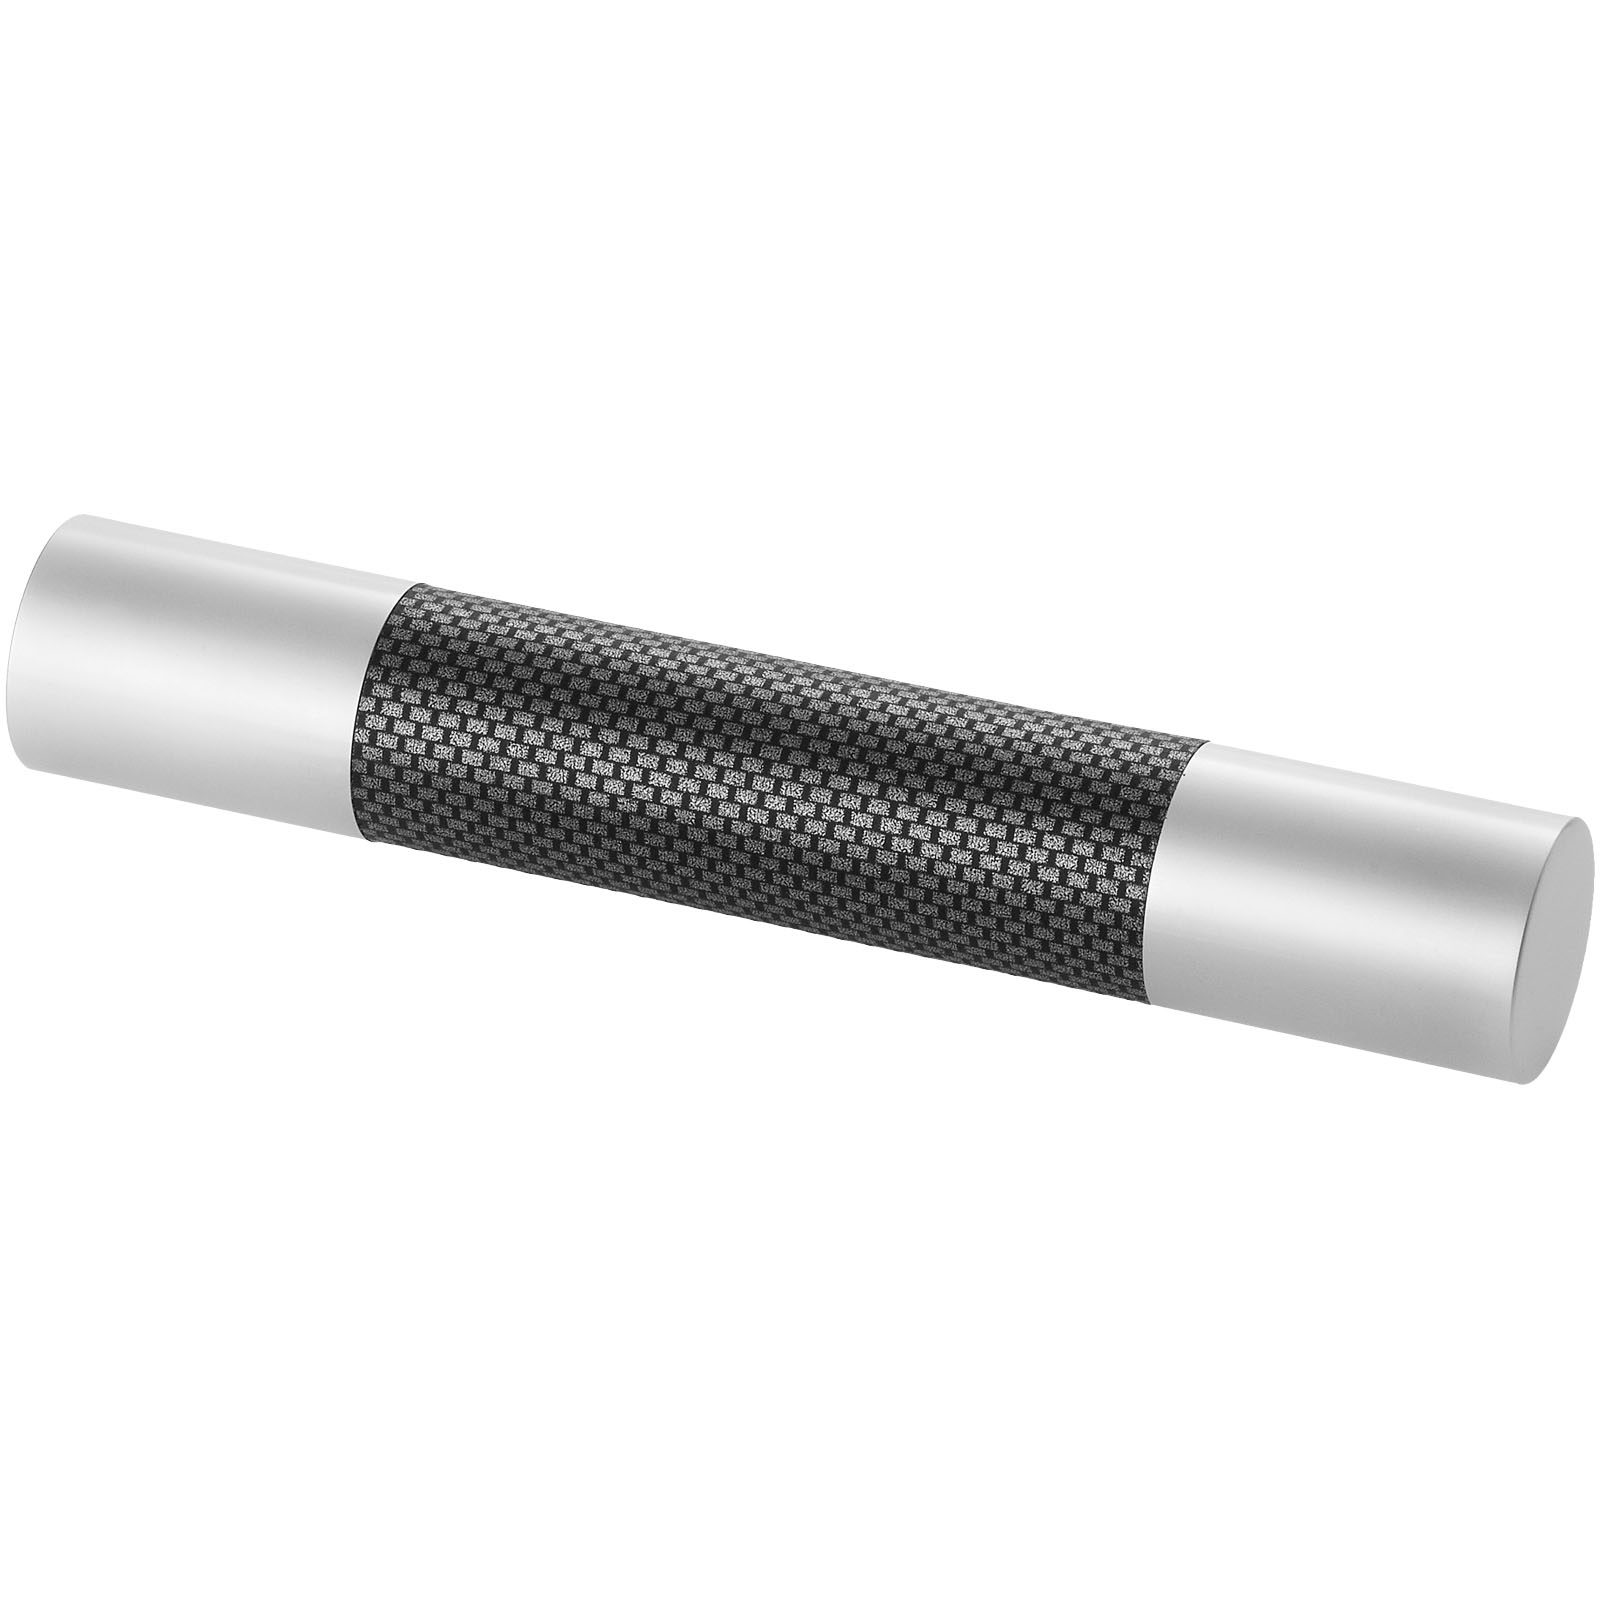 Advertising Ballpoint Pens - Winona ballpoint pen with carbon fibre details - 2